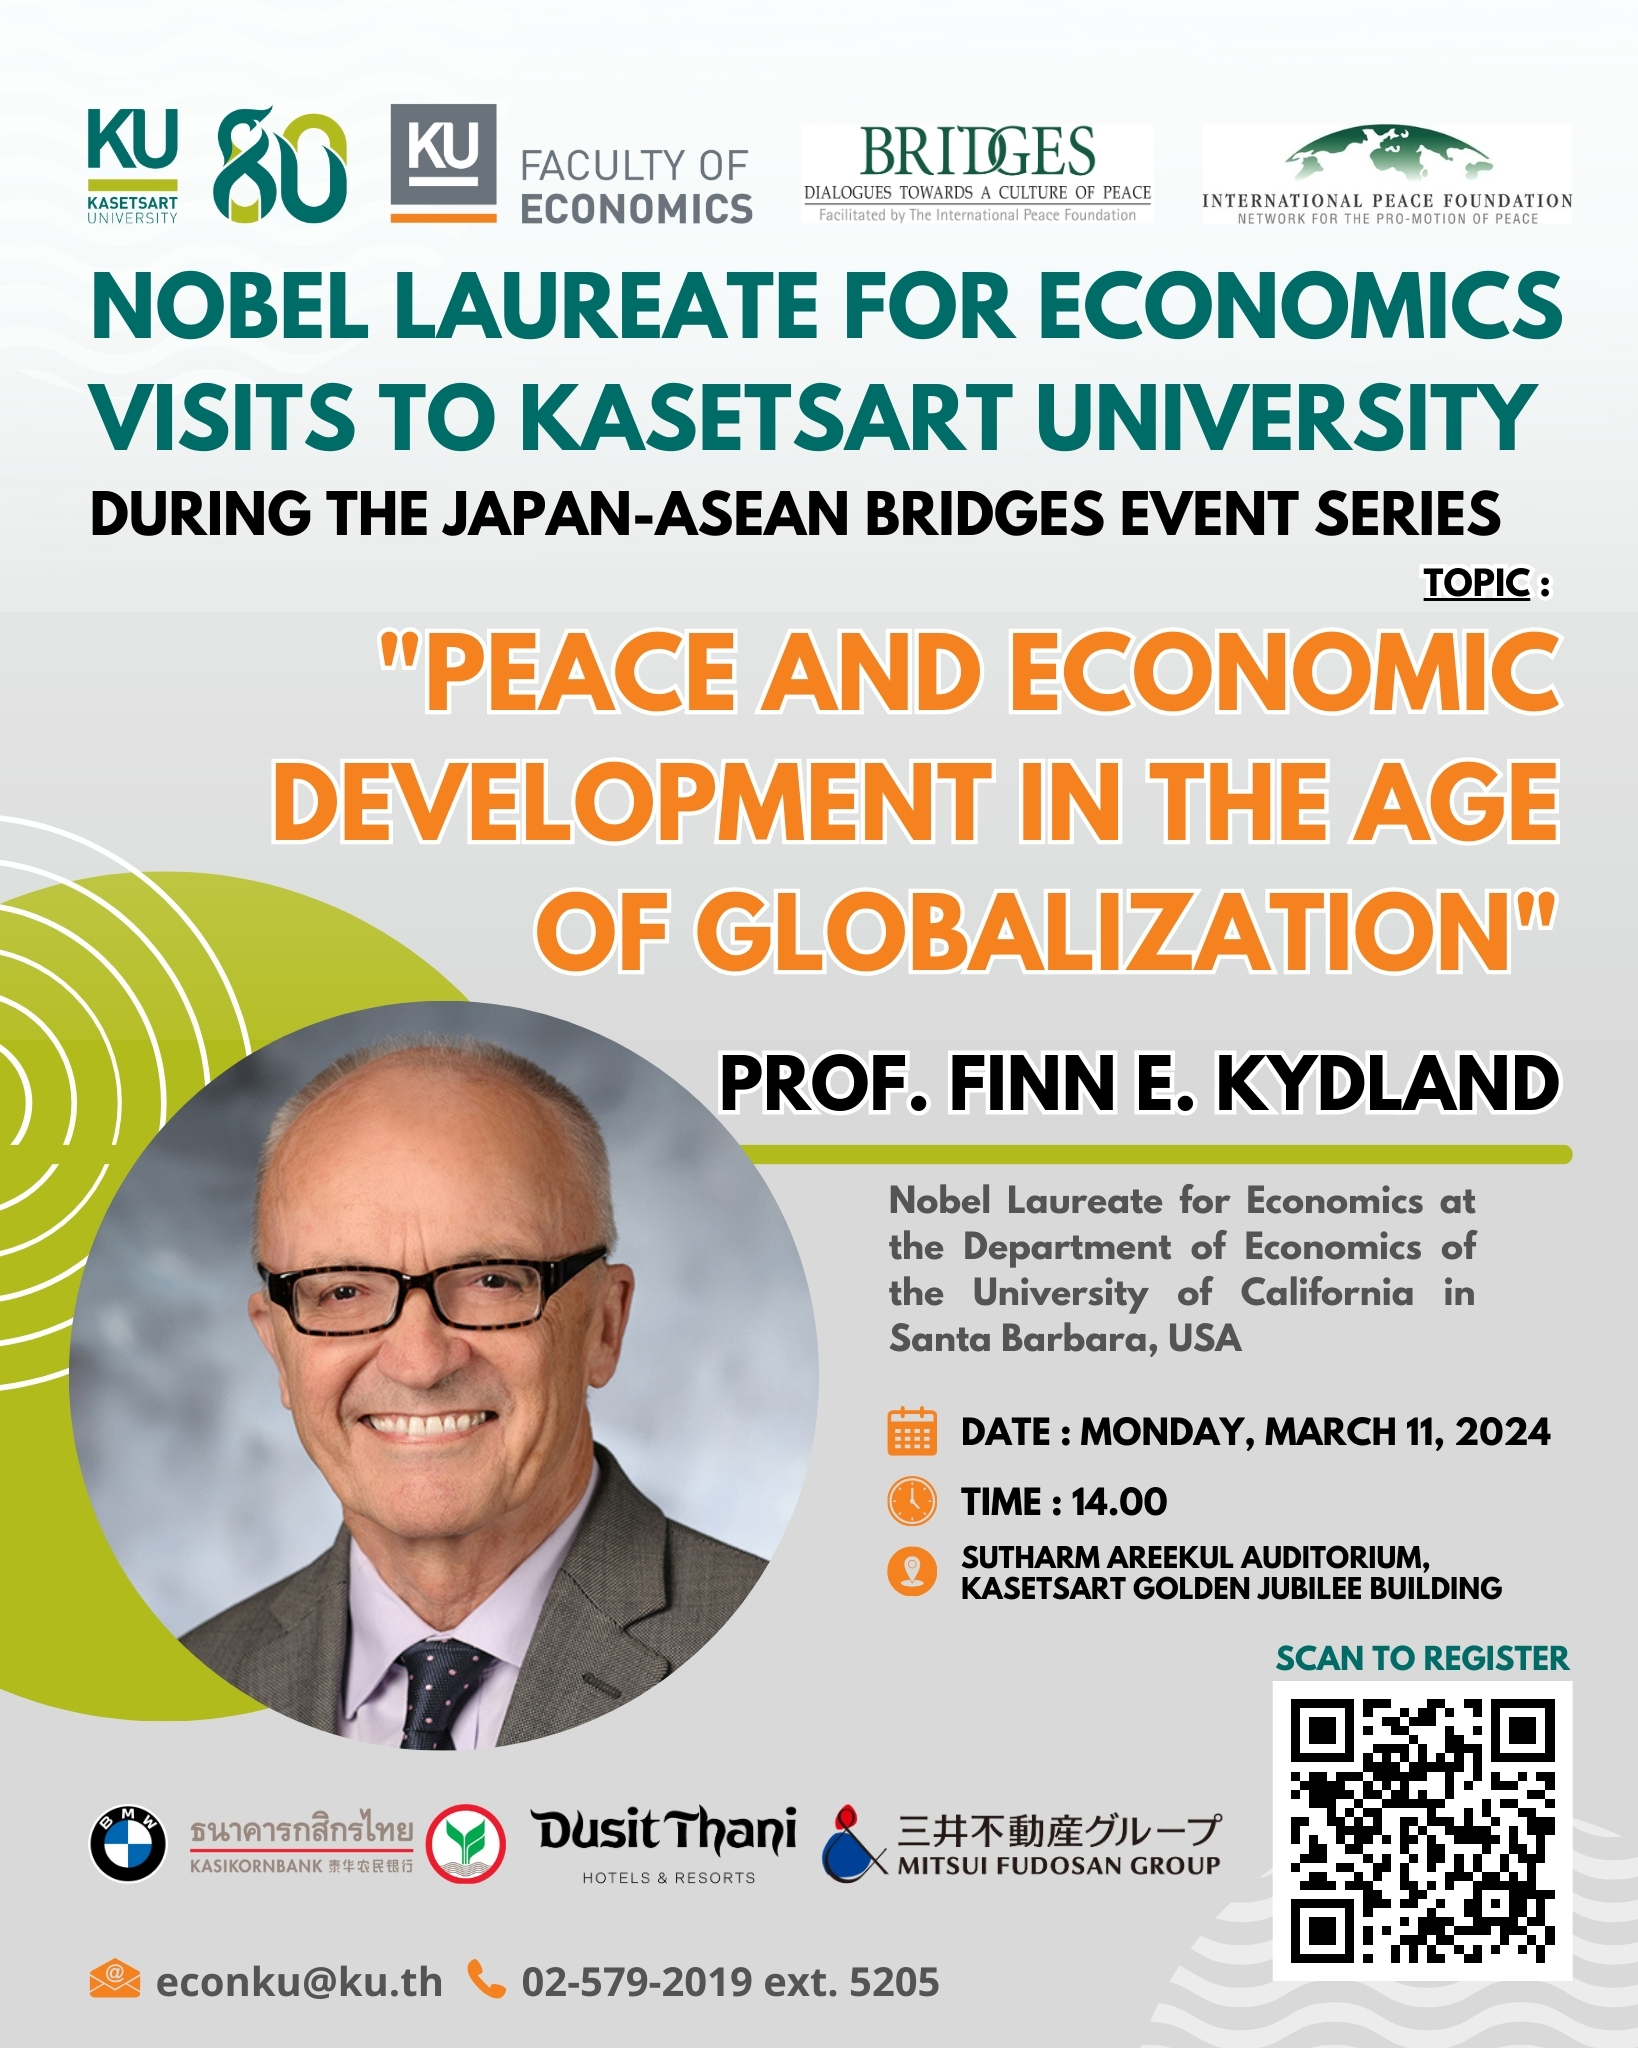 Nobel Laureates’ visiting to Kasetsart University during the JAPAN-ASEAN BRIDGES event series in March 2024